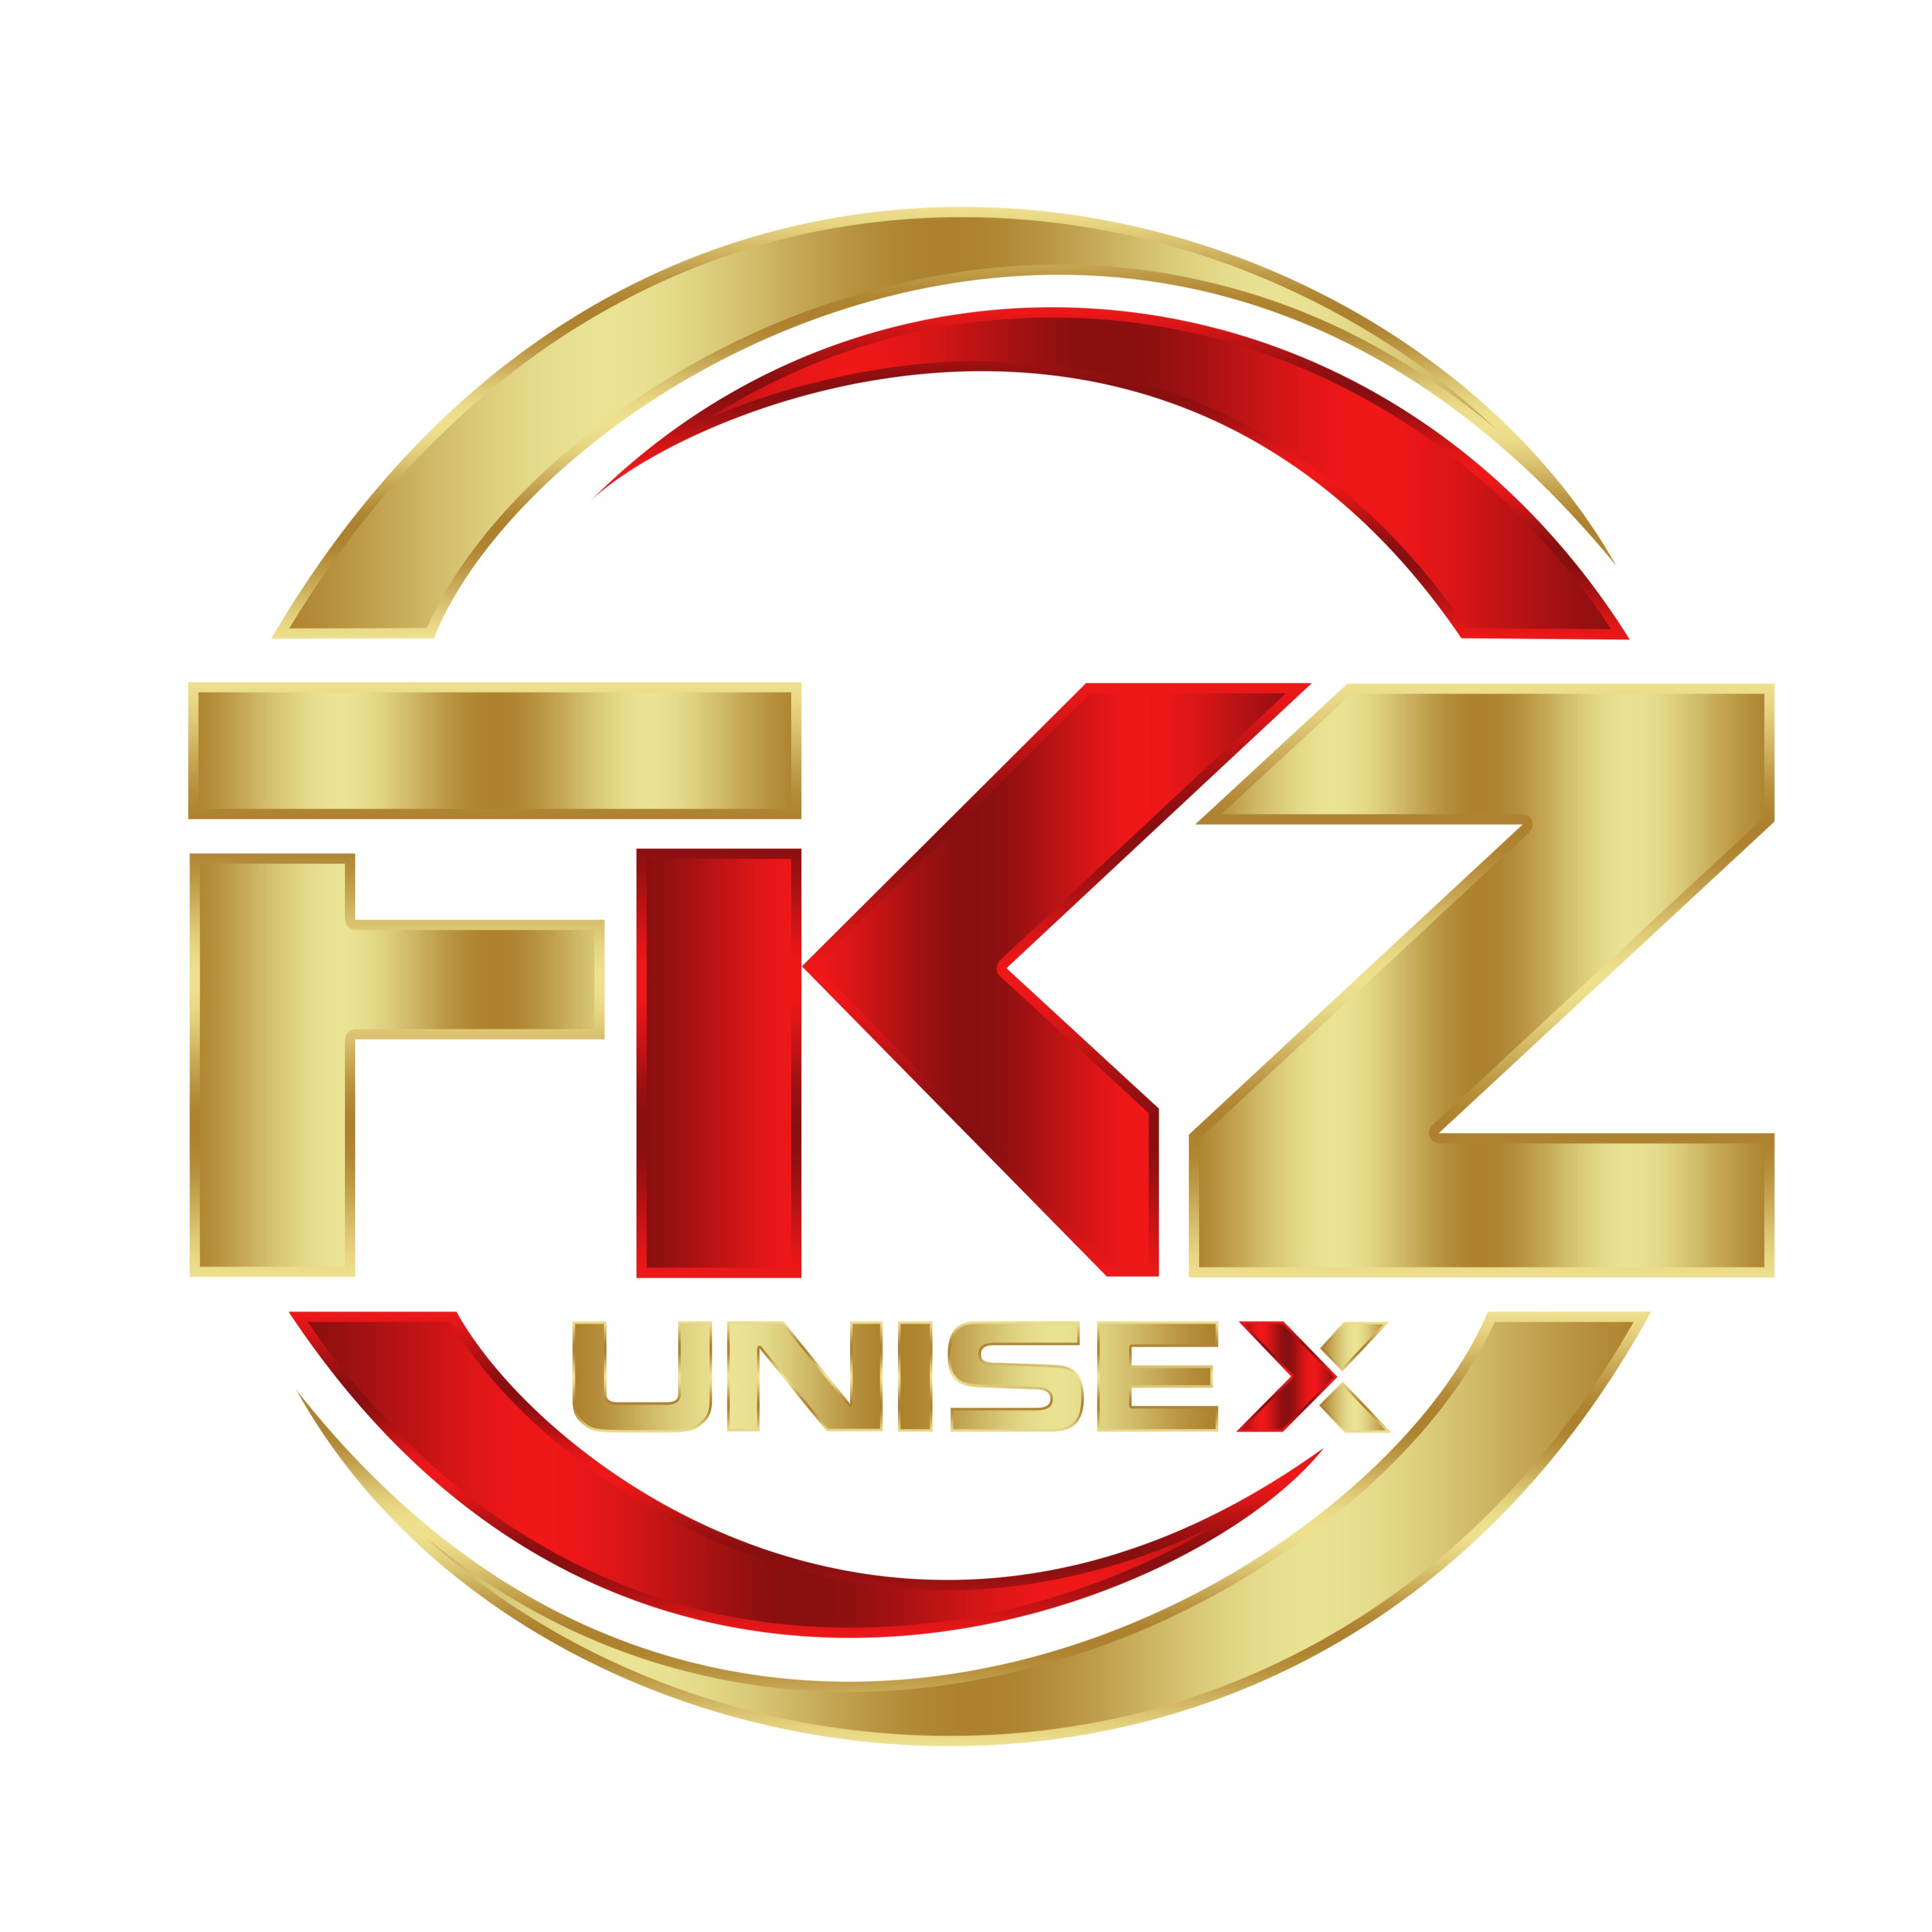 FKZ Unisex